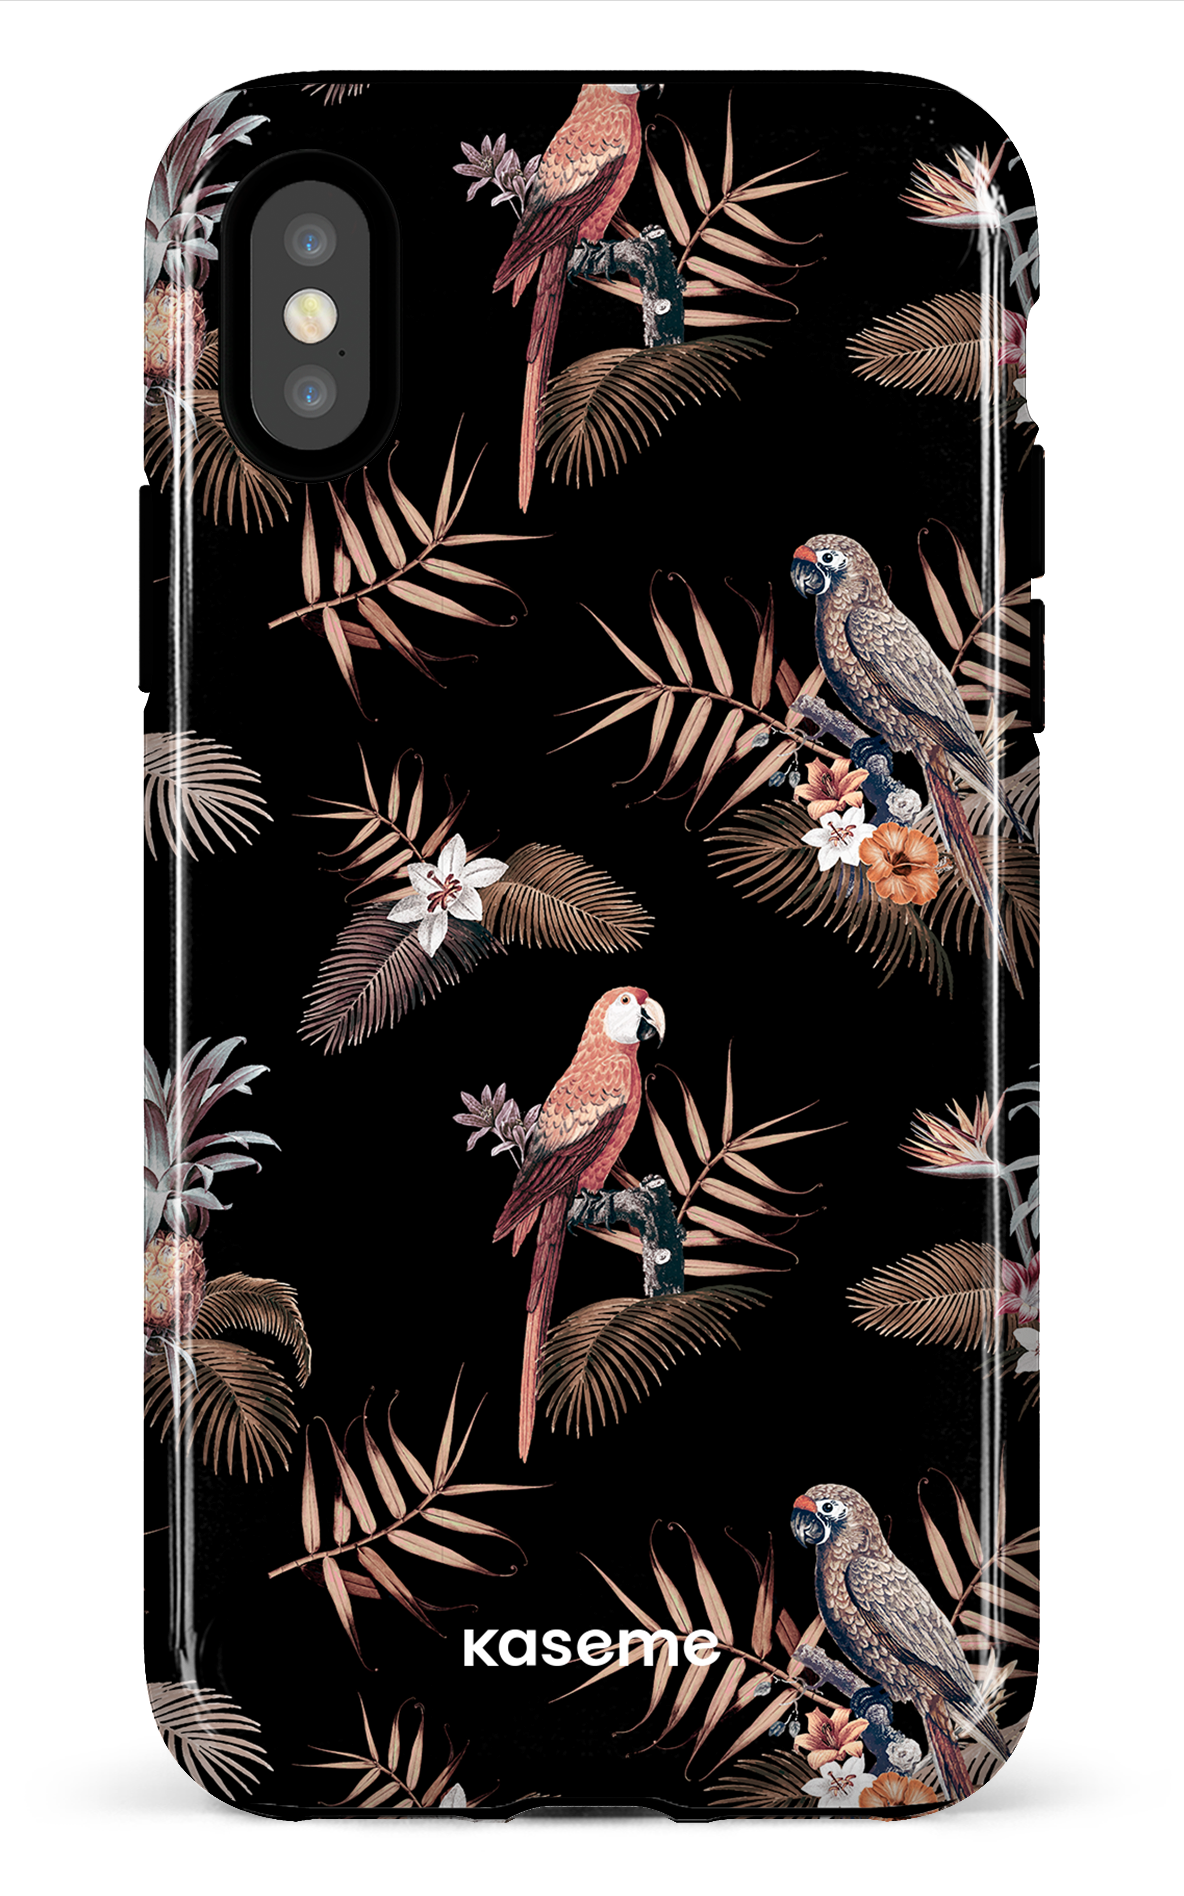 Rainforest - iPhone X/XS